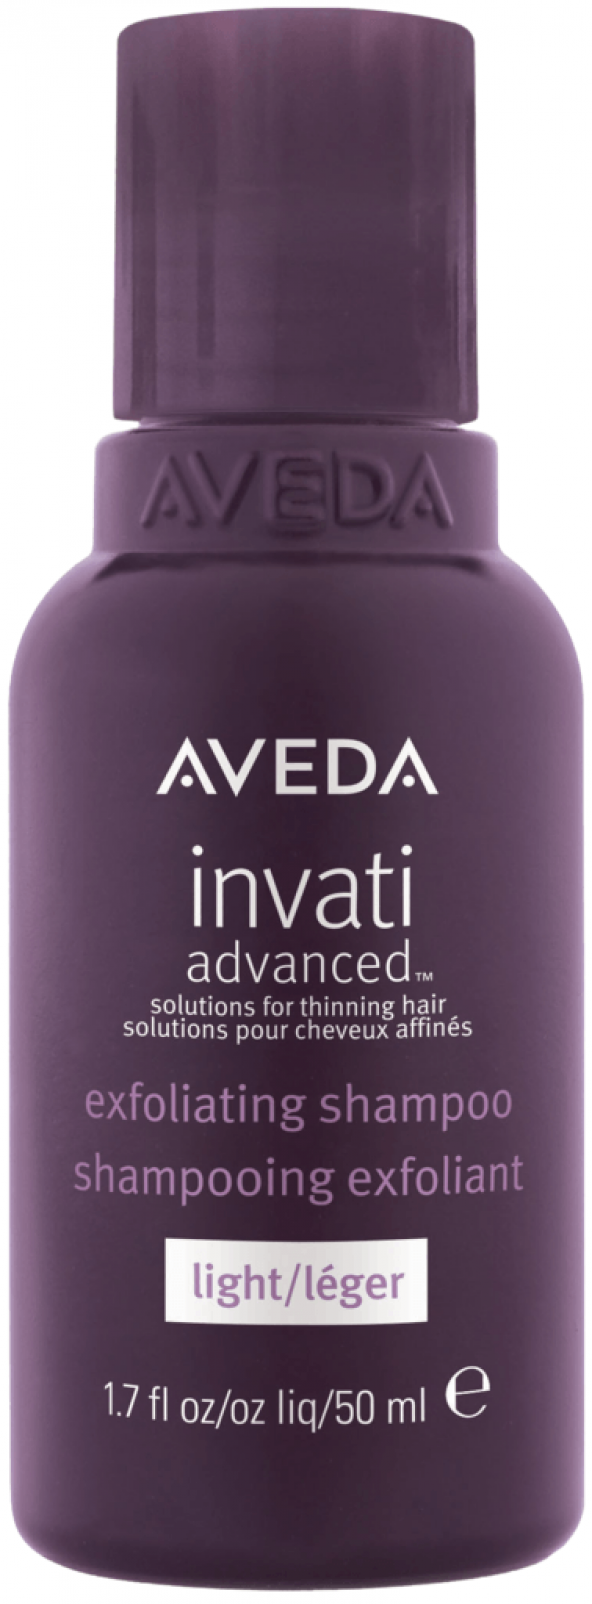 Aveda Invati Advanced Saç Dökülmesine Karşı Şampuan Hafif Doku 50ml 018084022870